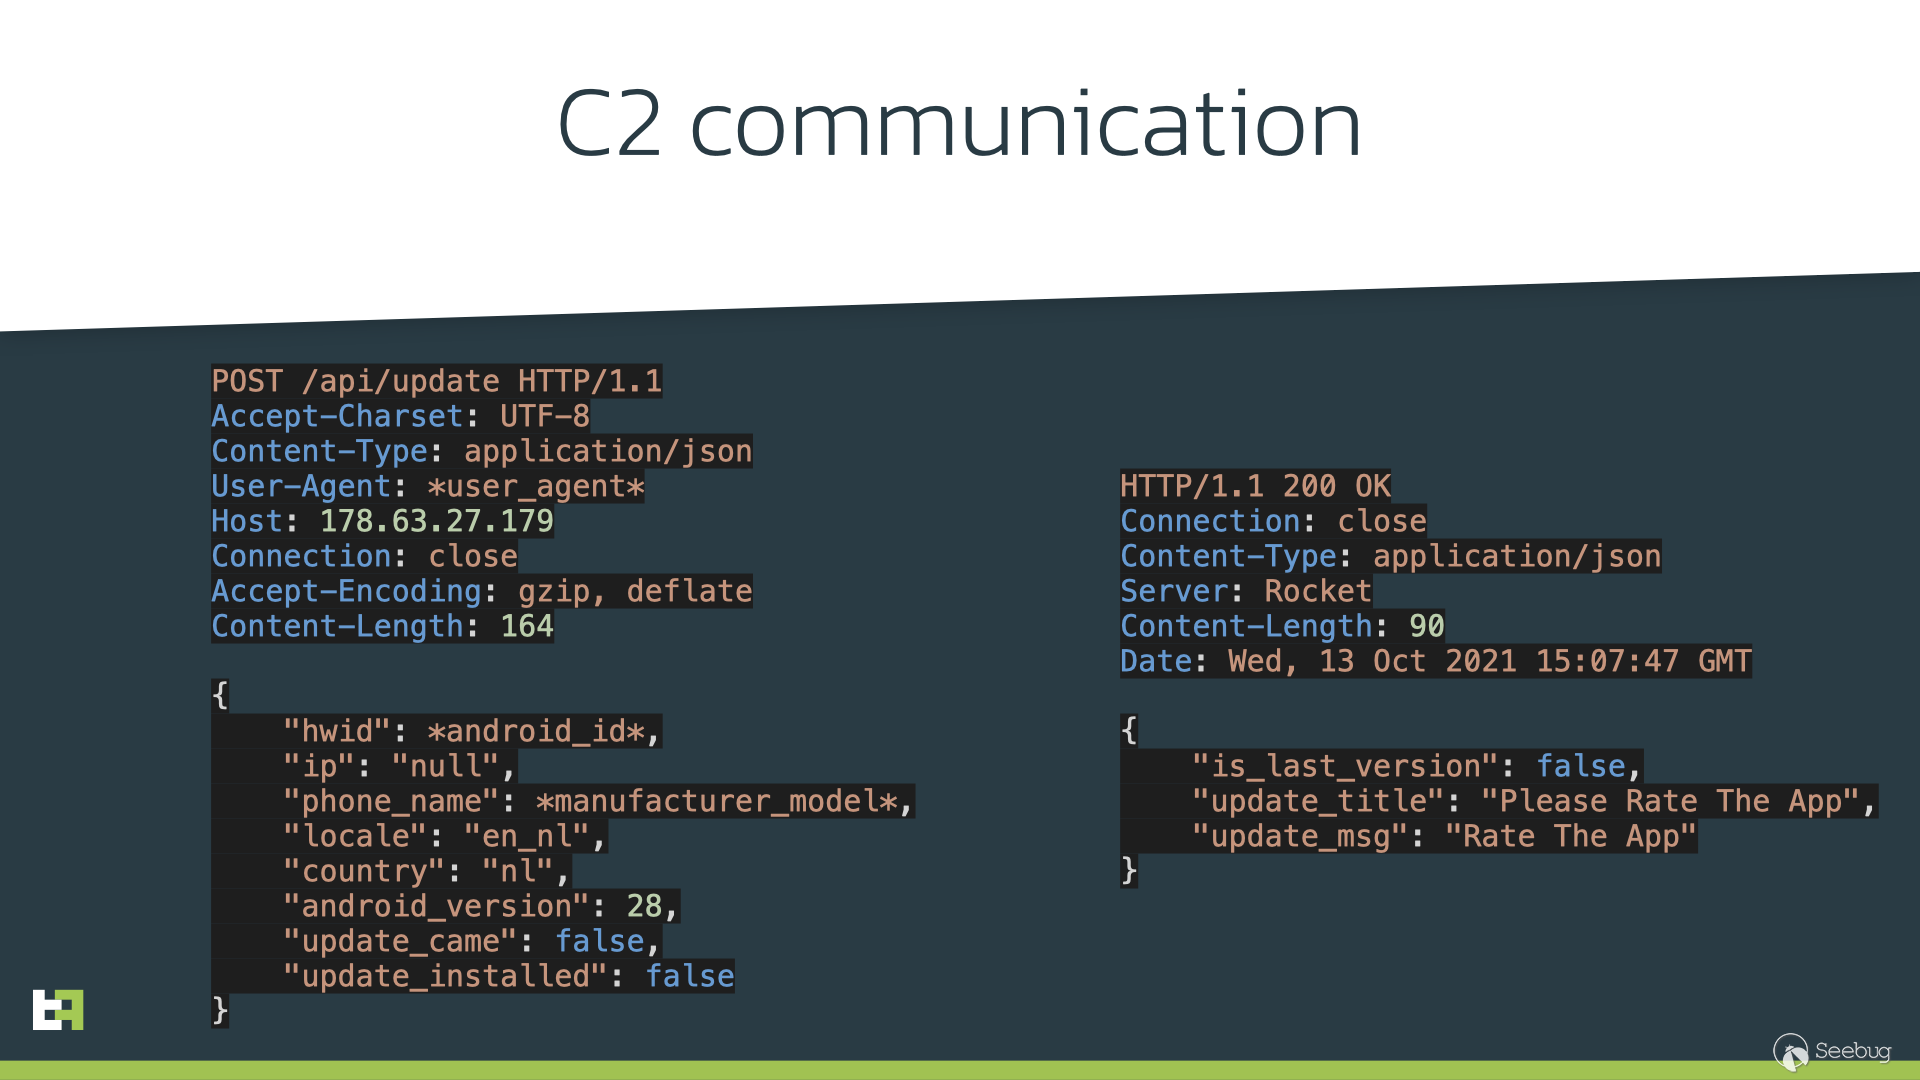 C2 communication